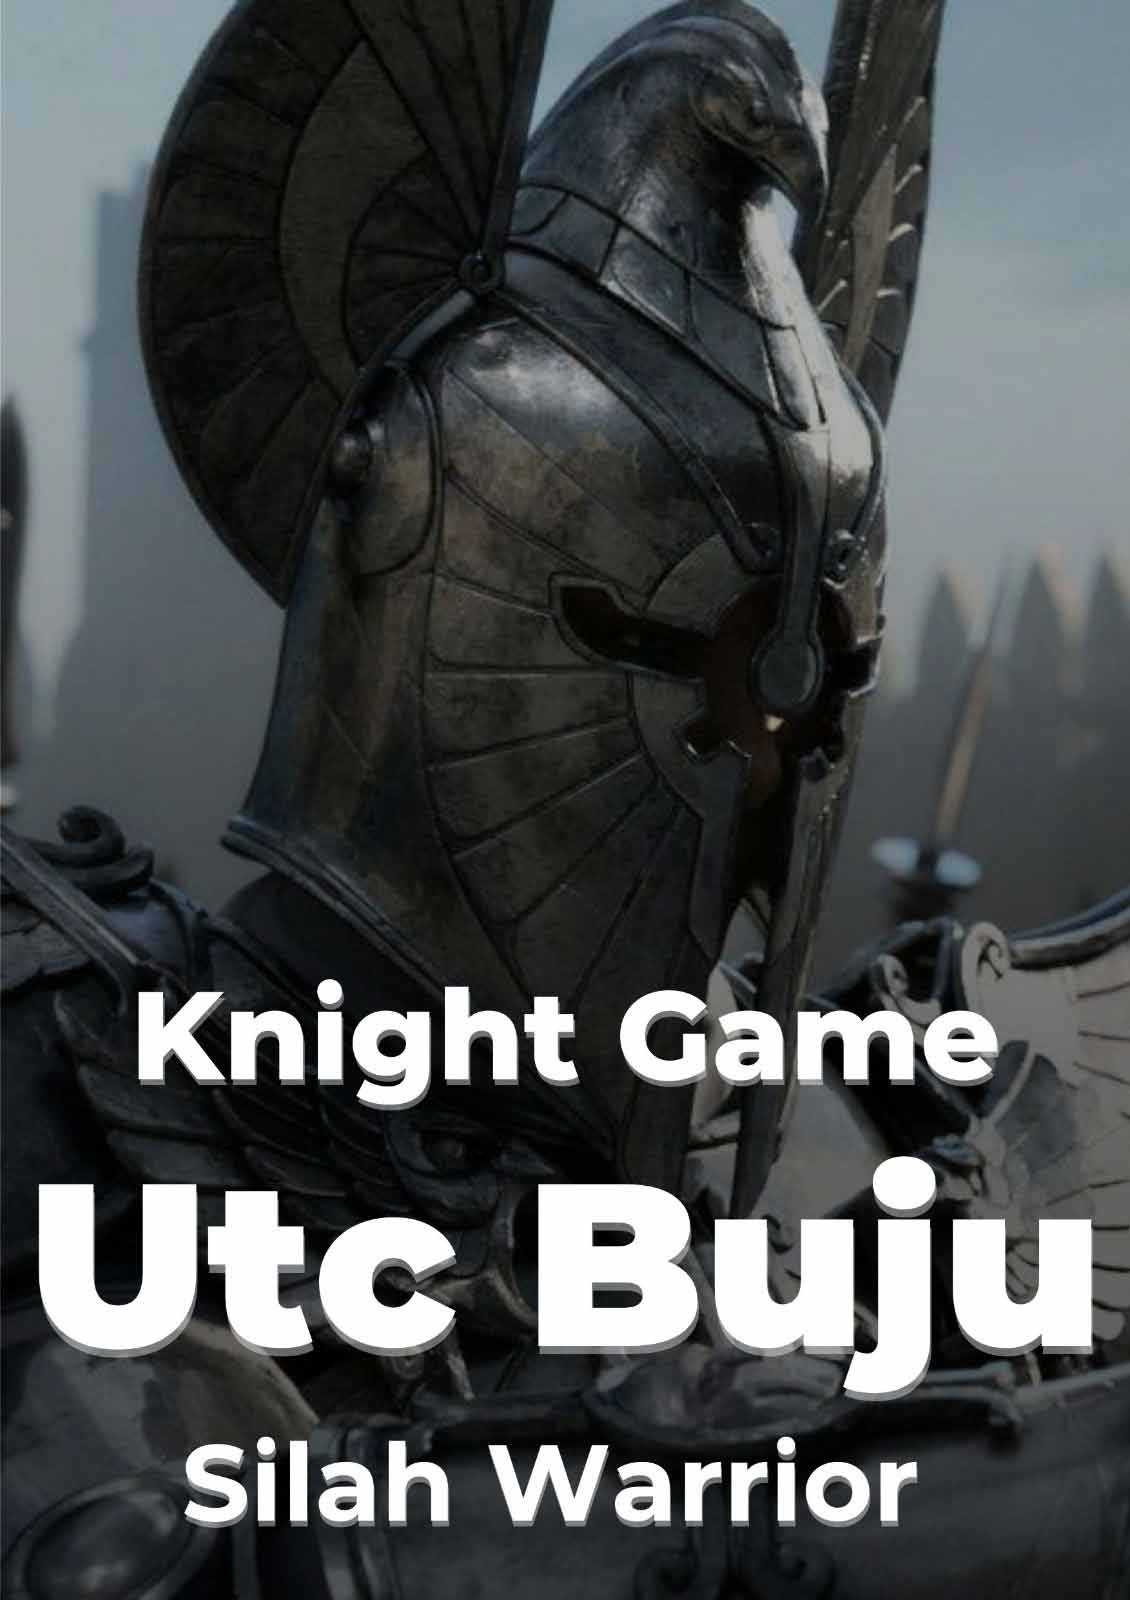 UTC BUJU (Warrior)